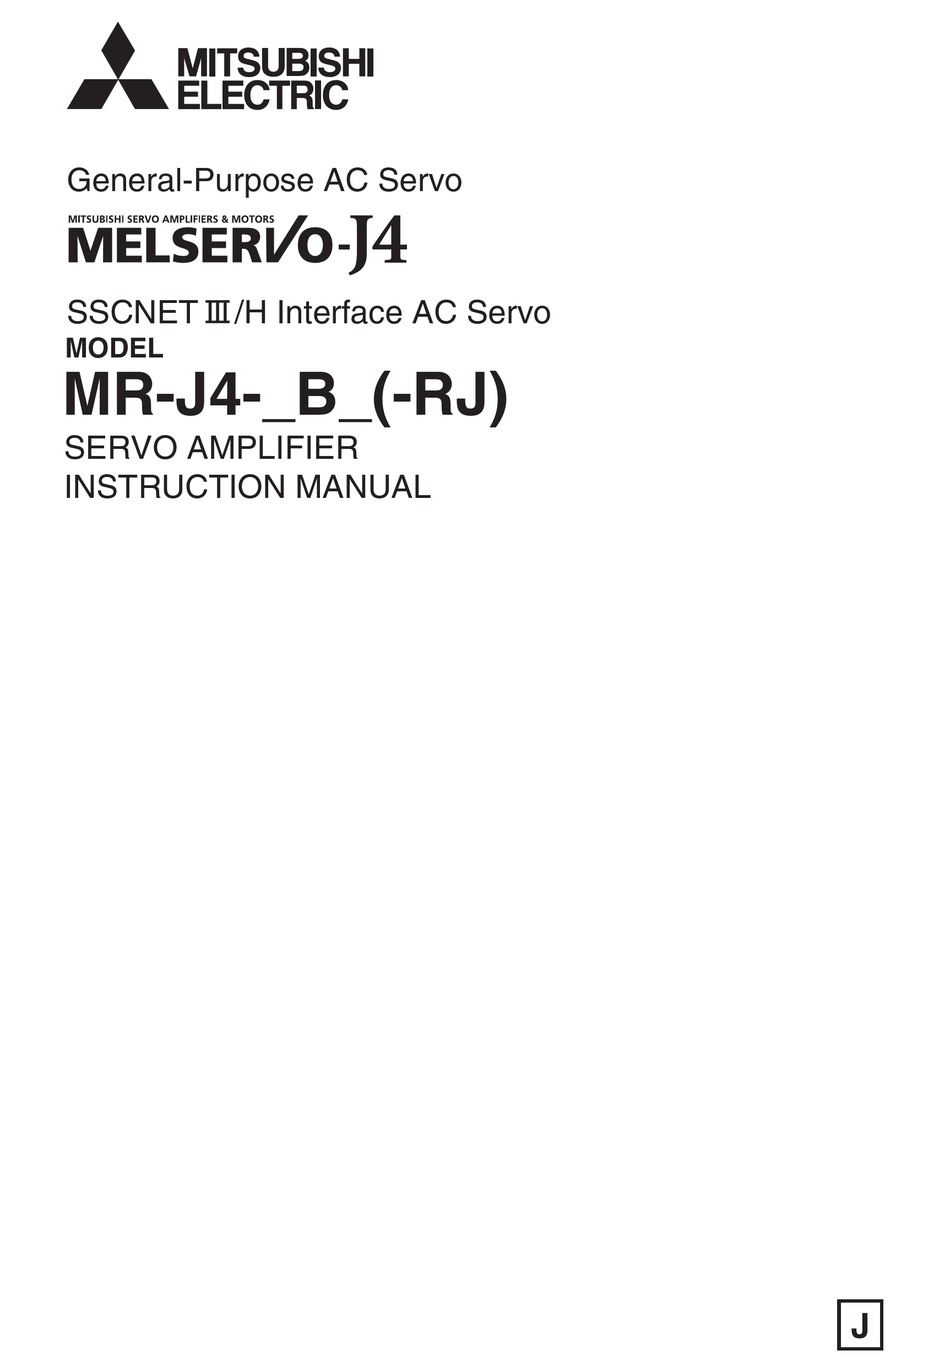 MITSUBISHI ELECTRIC MR-J4 INSTRUCTION MANUAL Pdf Download | ManualsLib